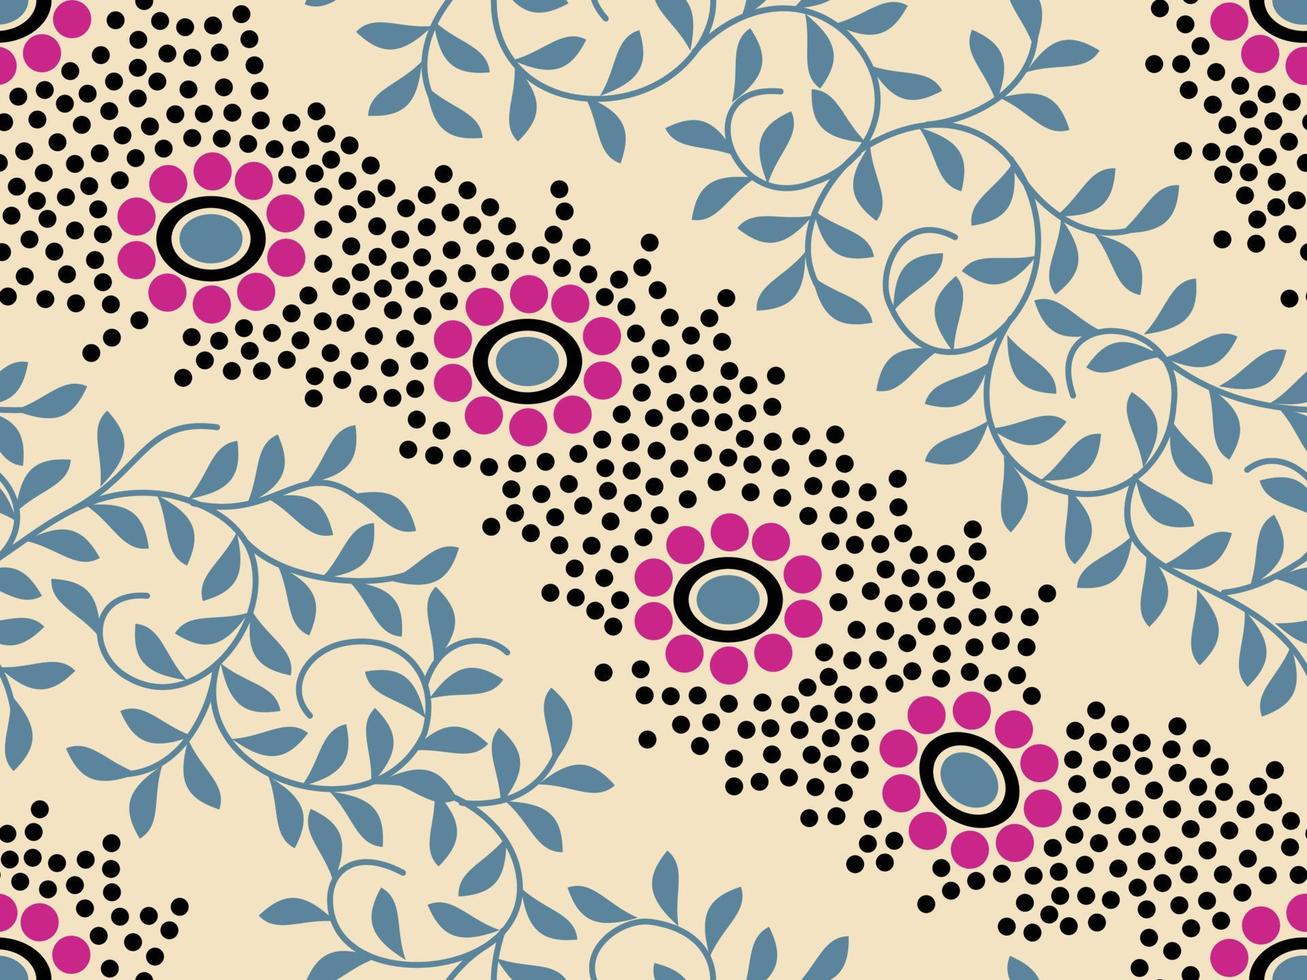 abstrakt Blumen- Vektor Muster multi Farbe Textil- design.eps